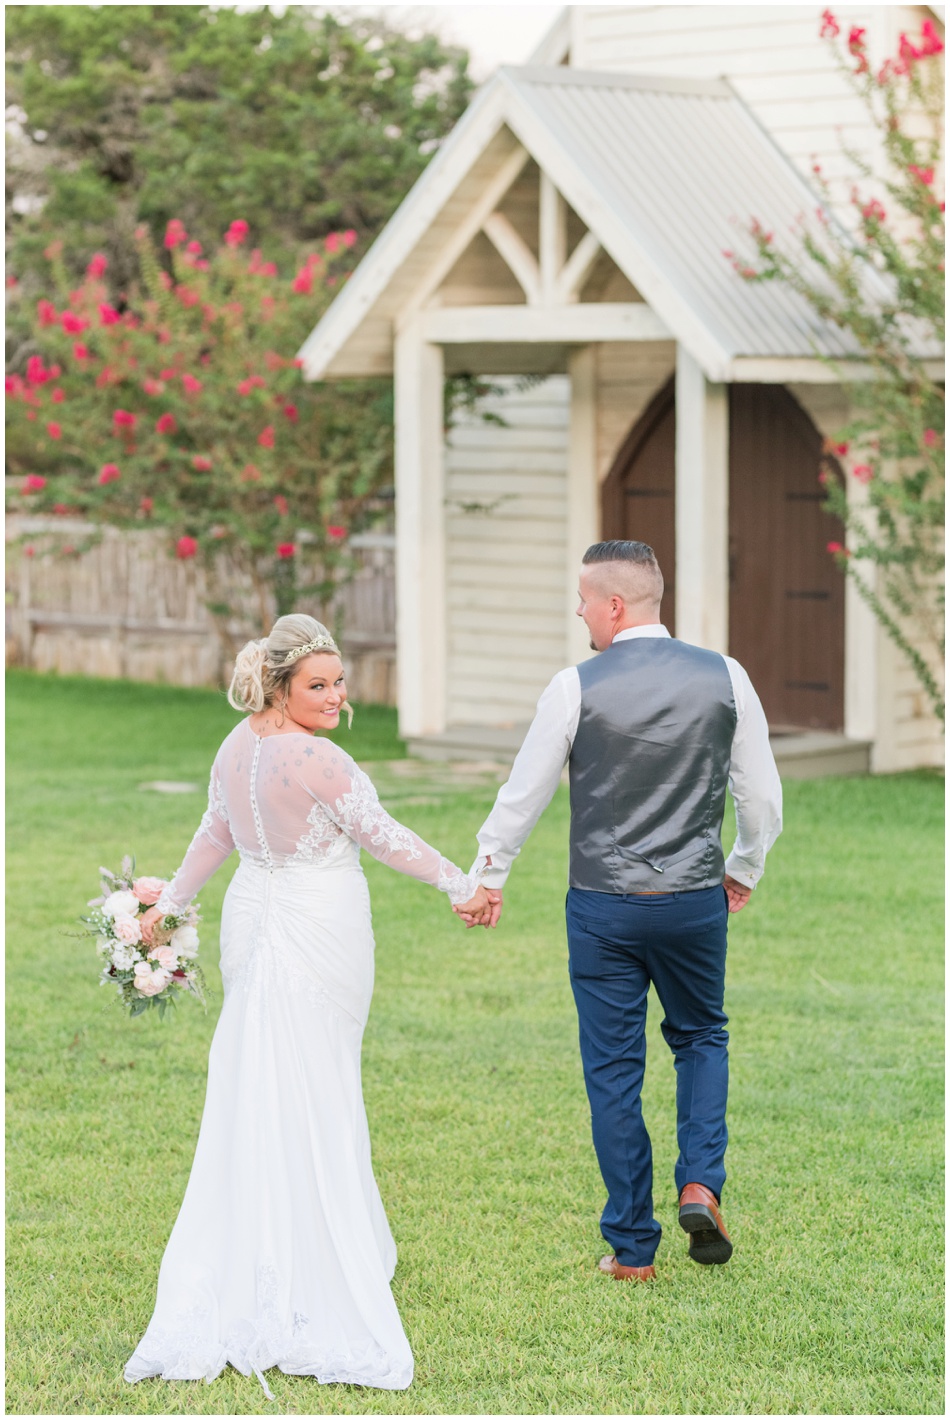 Wedding Venues near Austin with Little White Chapel